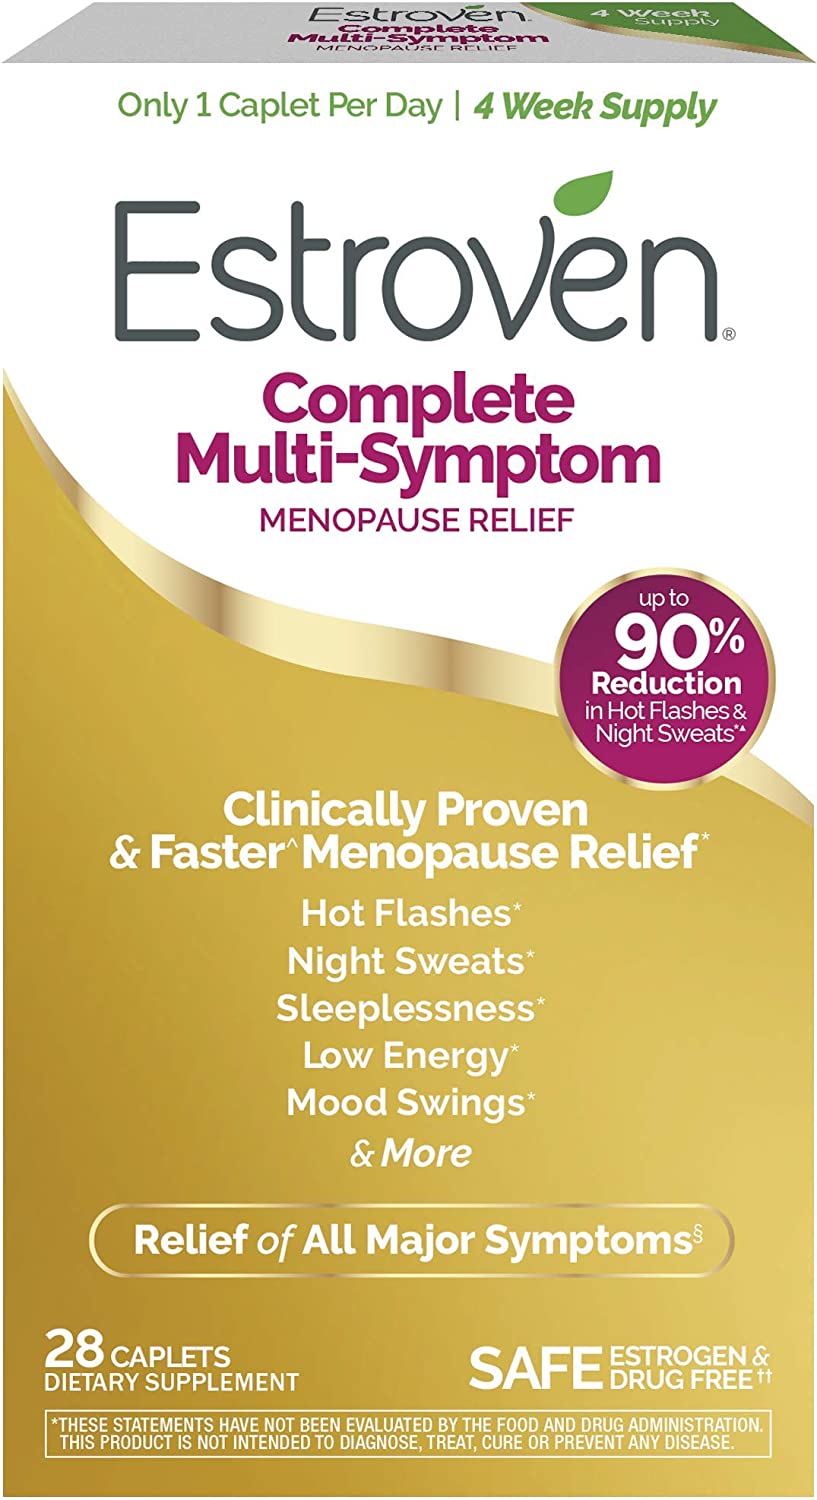 Estroven Complete Multi-Symptom Menopause Relief, Safe, Effective and Drug Free